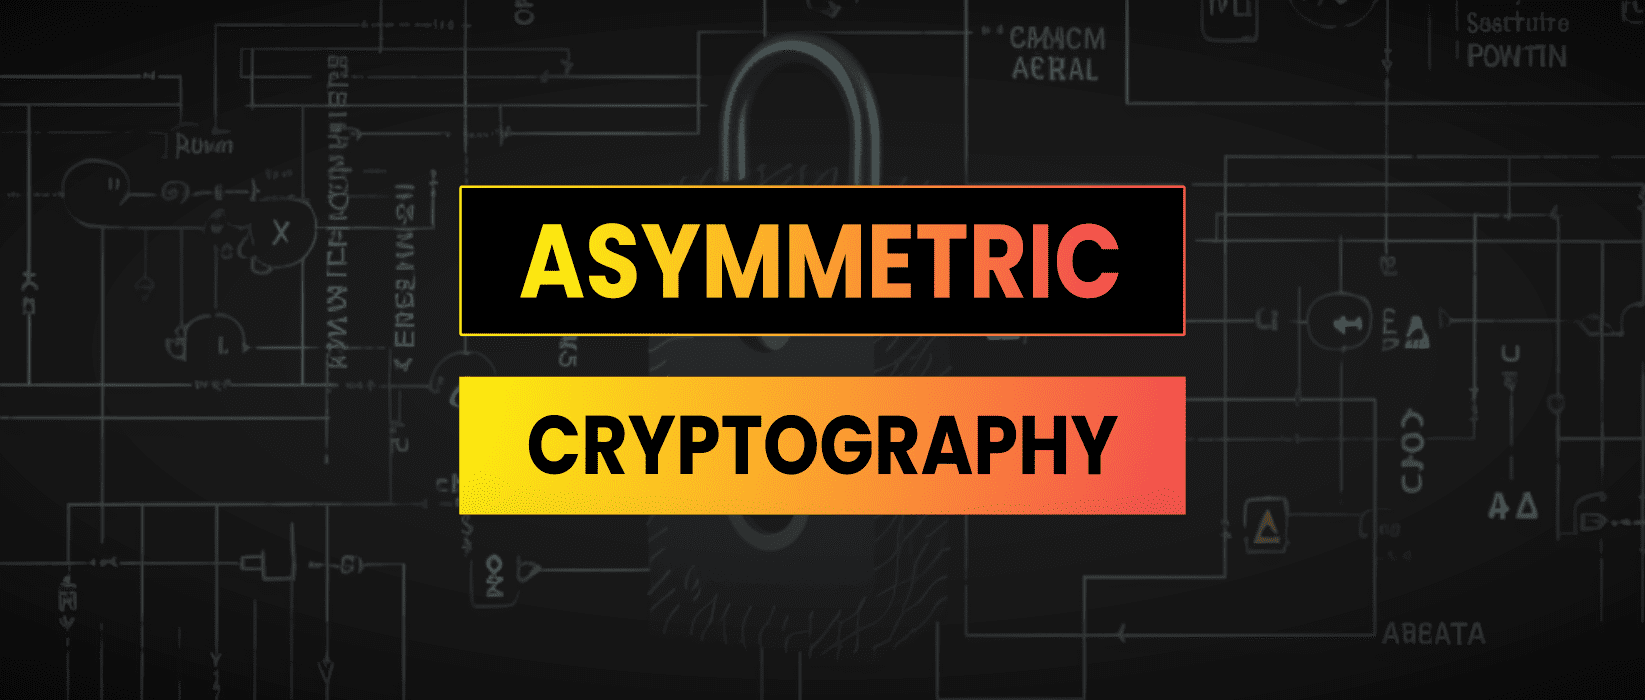 Asymmetric Cryptography Explained